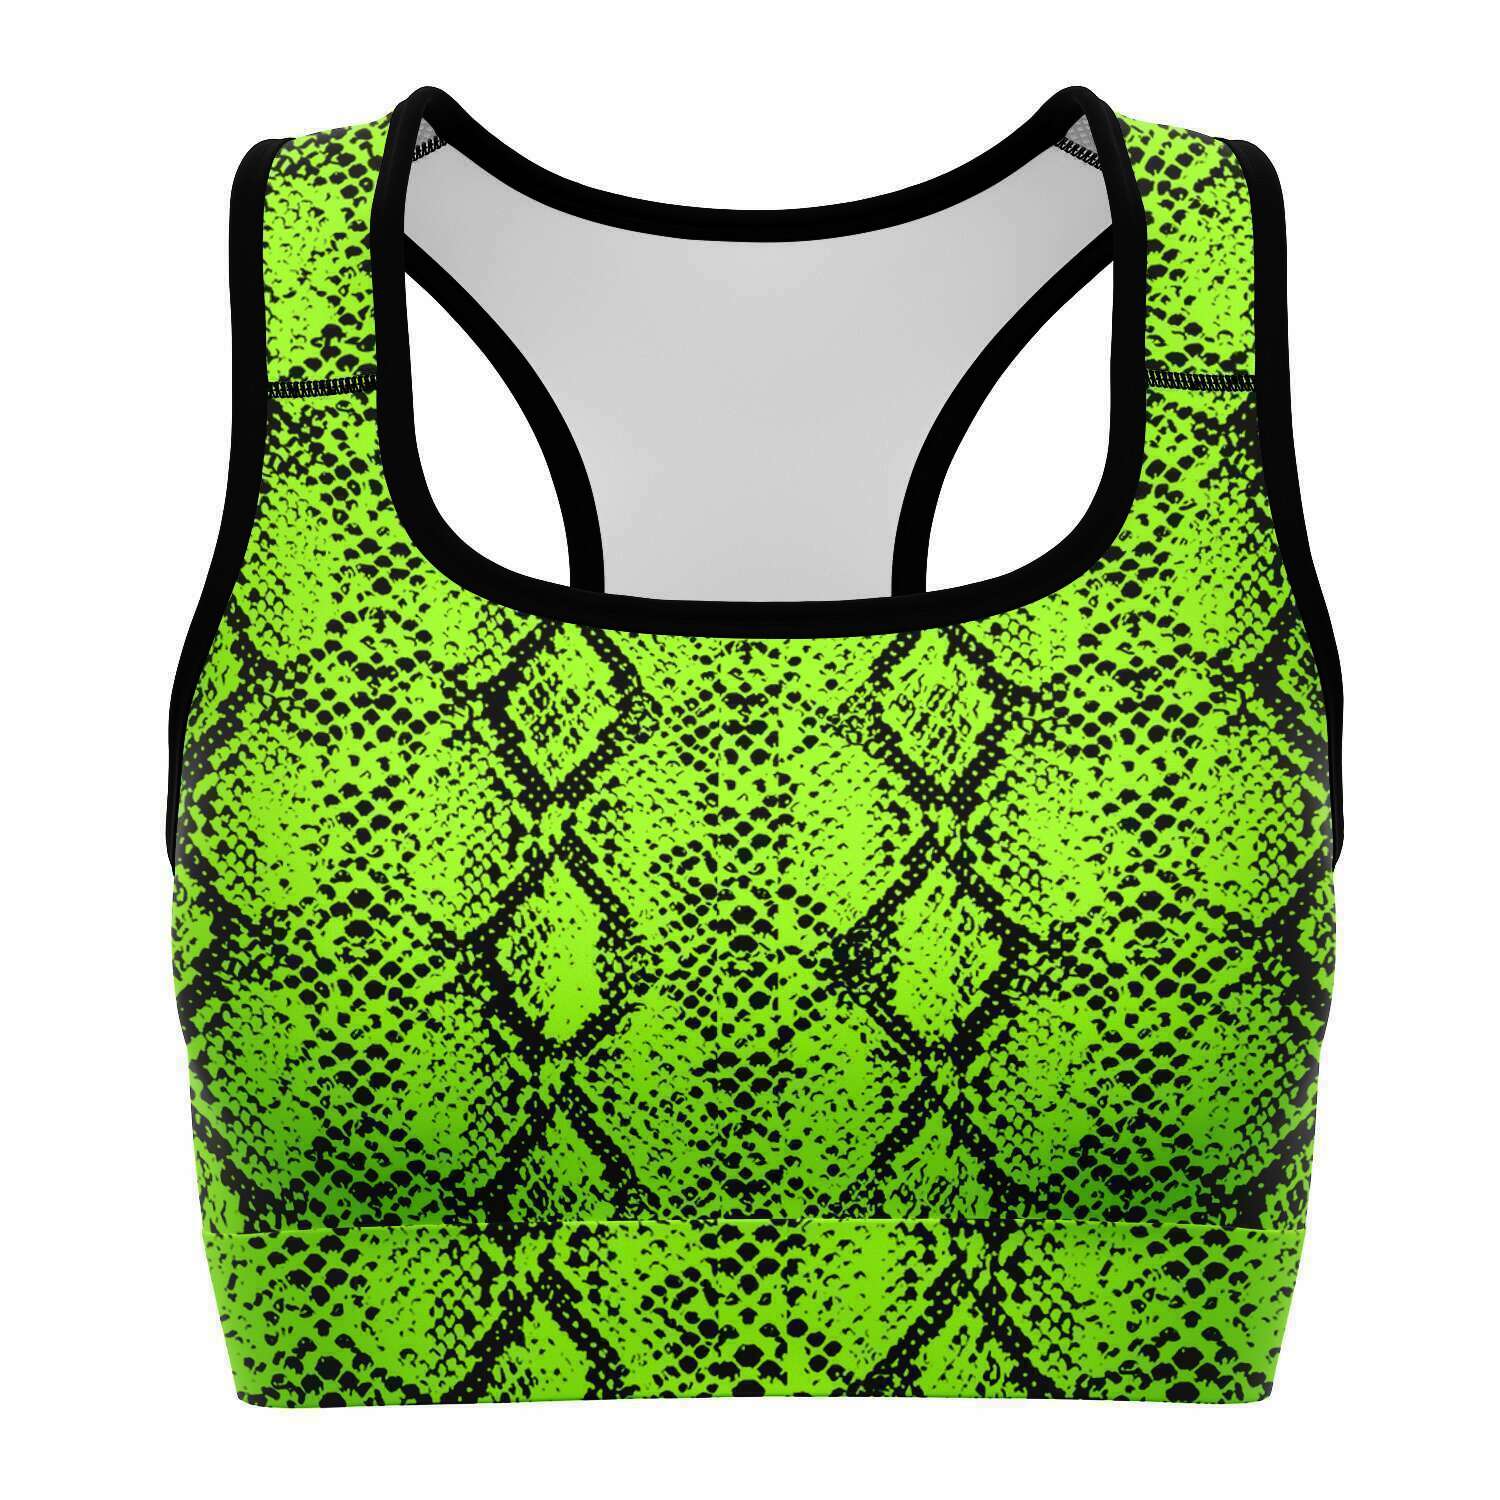 Women's Green Snakeskin Reptile Print Athletic Sports Bra